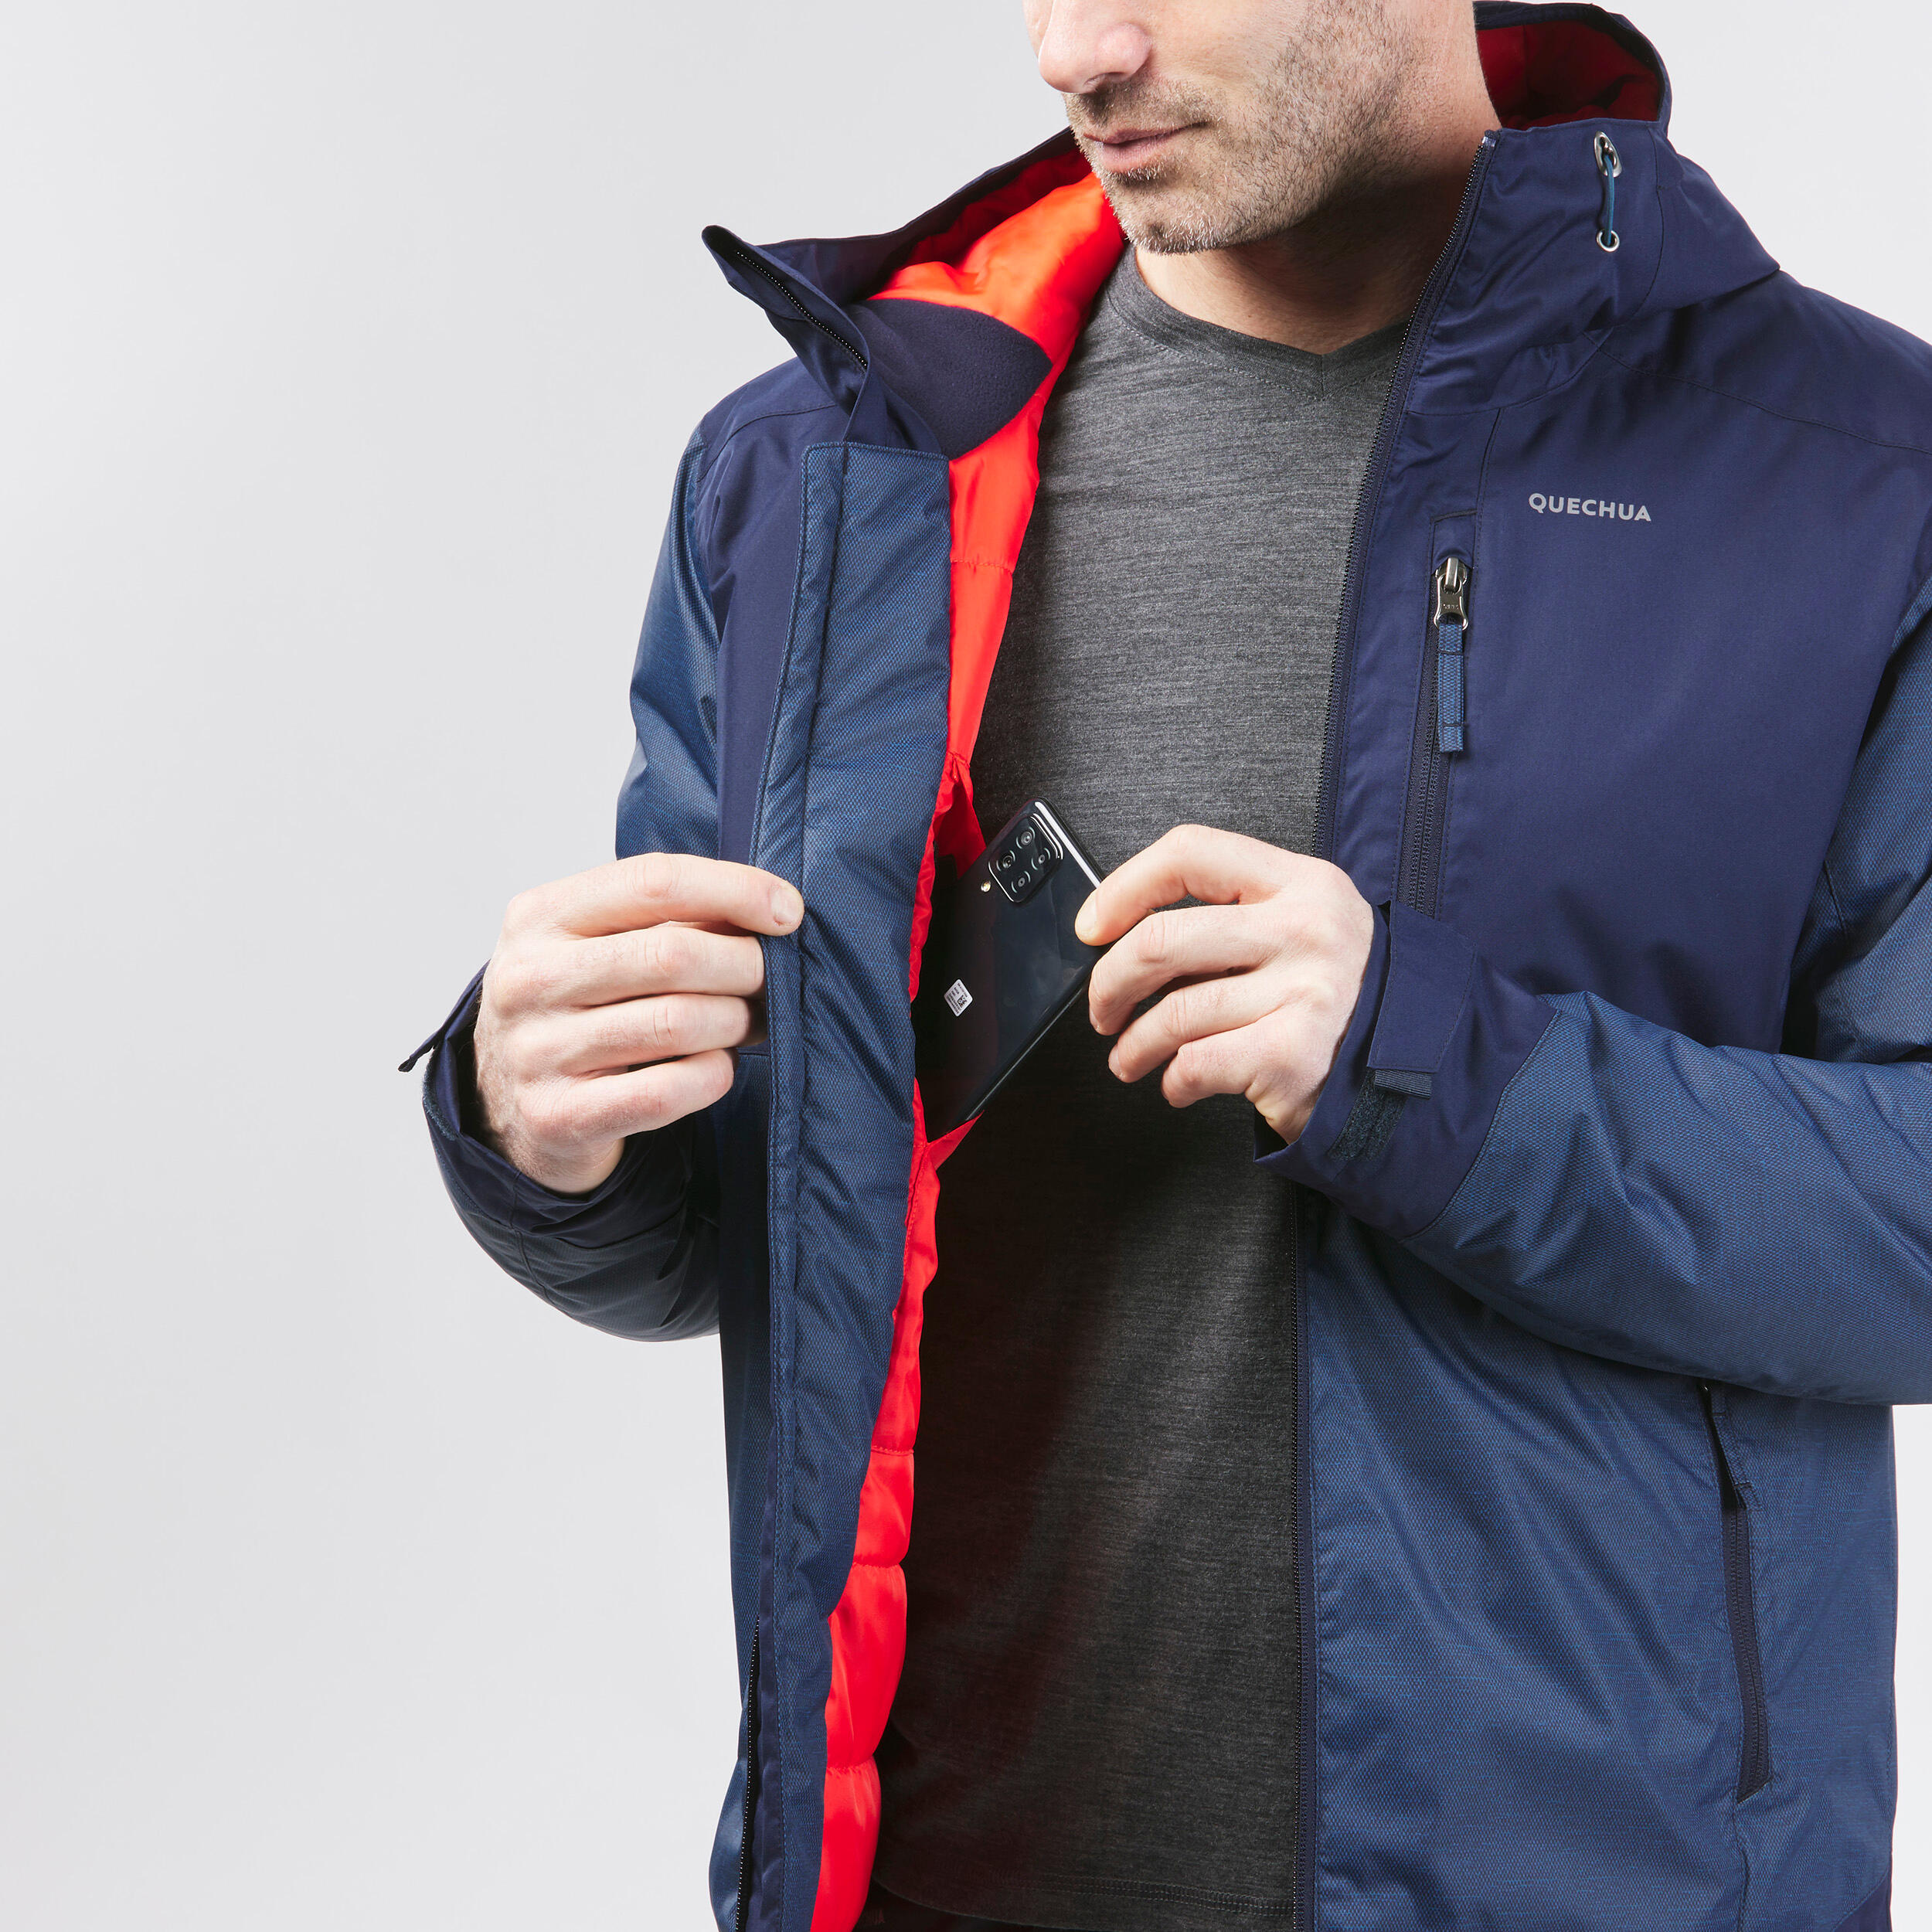 Men’s hiking waterproof winter jacket - SH500 -10°C 19/23